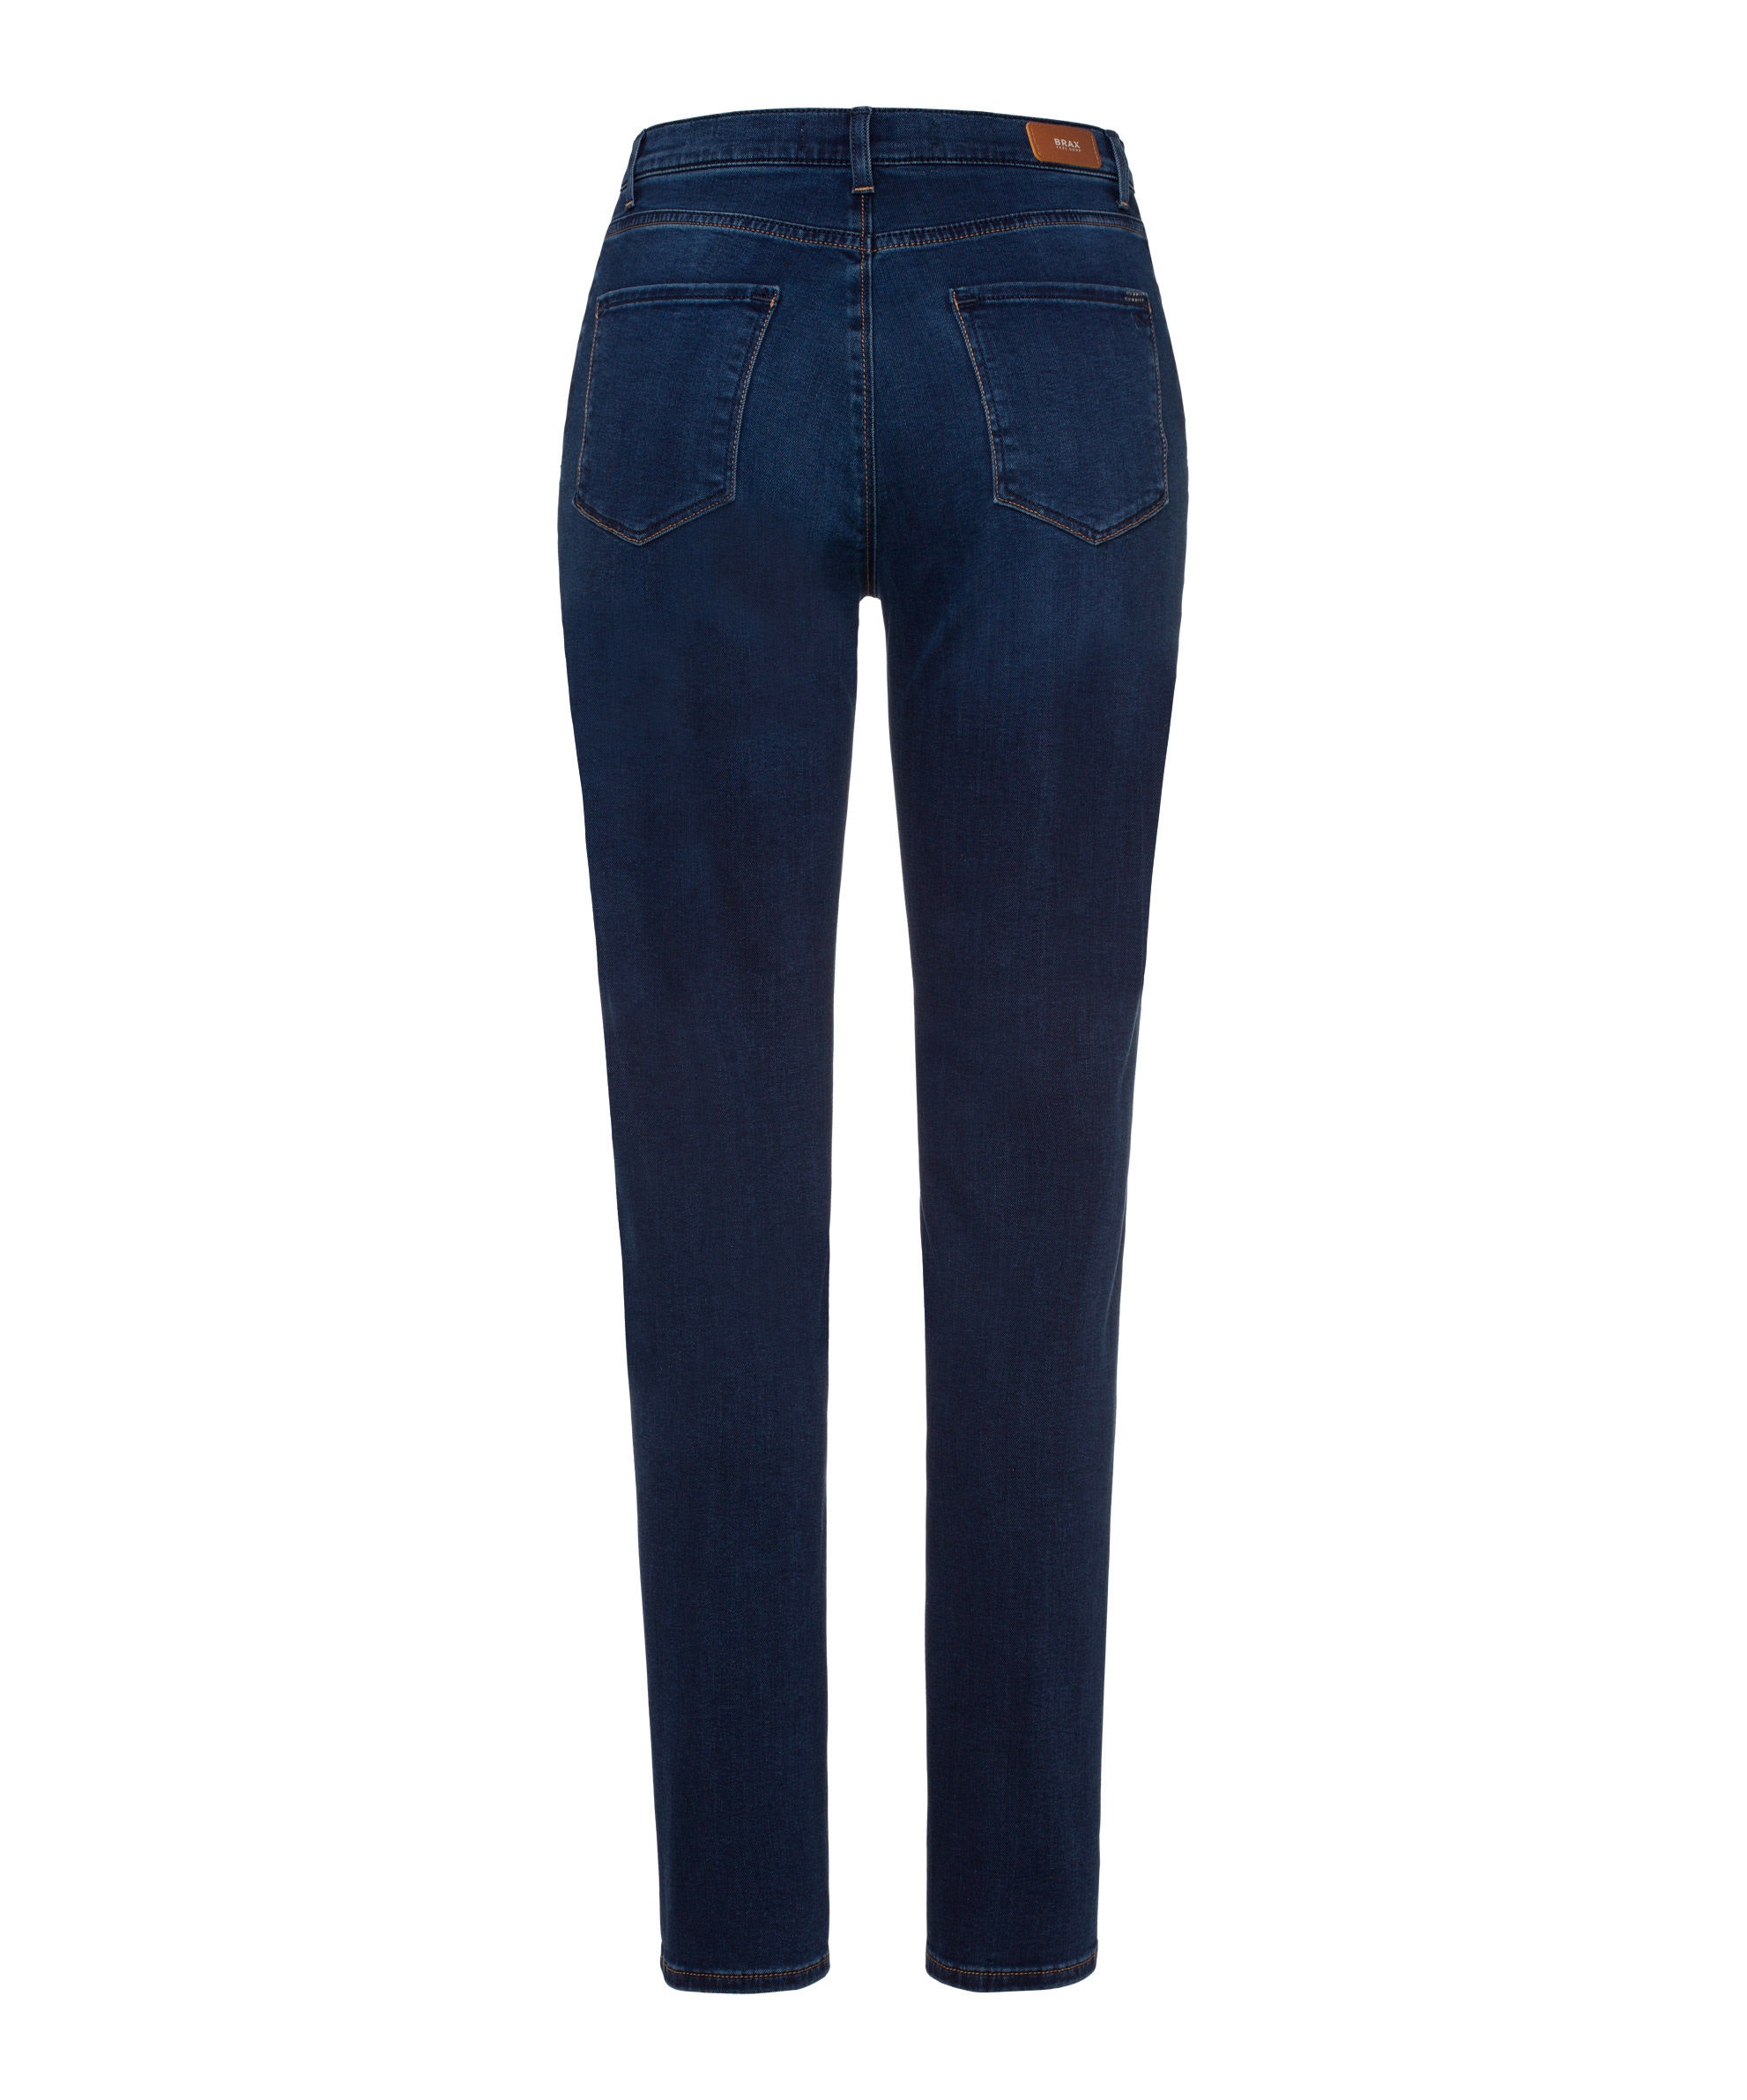 70-4000.22 clean Jeans | Mary Brax blue 9916920 Jeans-Manufaktur dark | Damen | MARY DENIM BRAX | Jeans | Brax